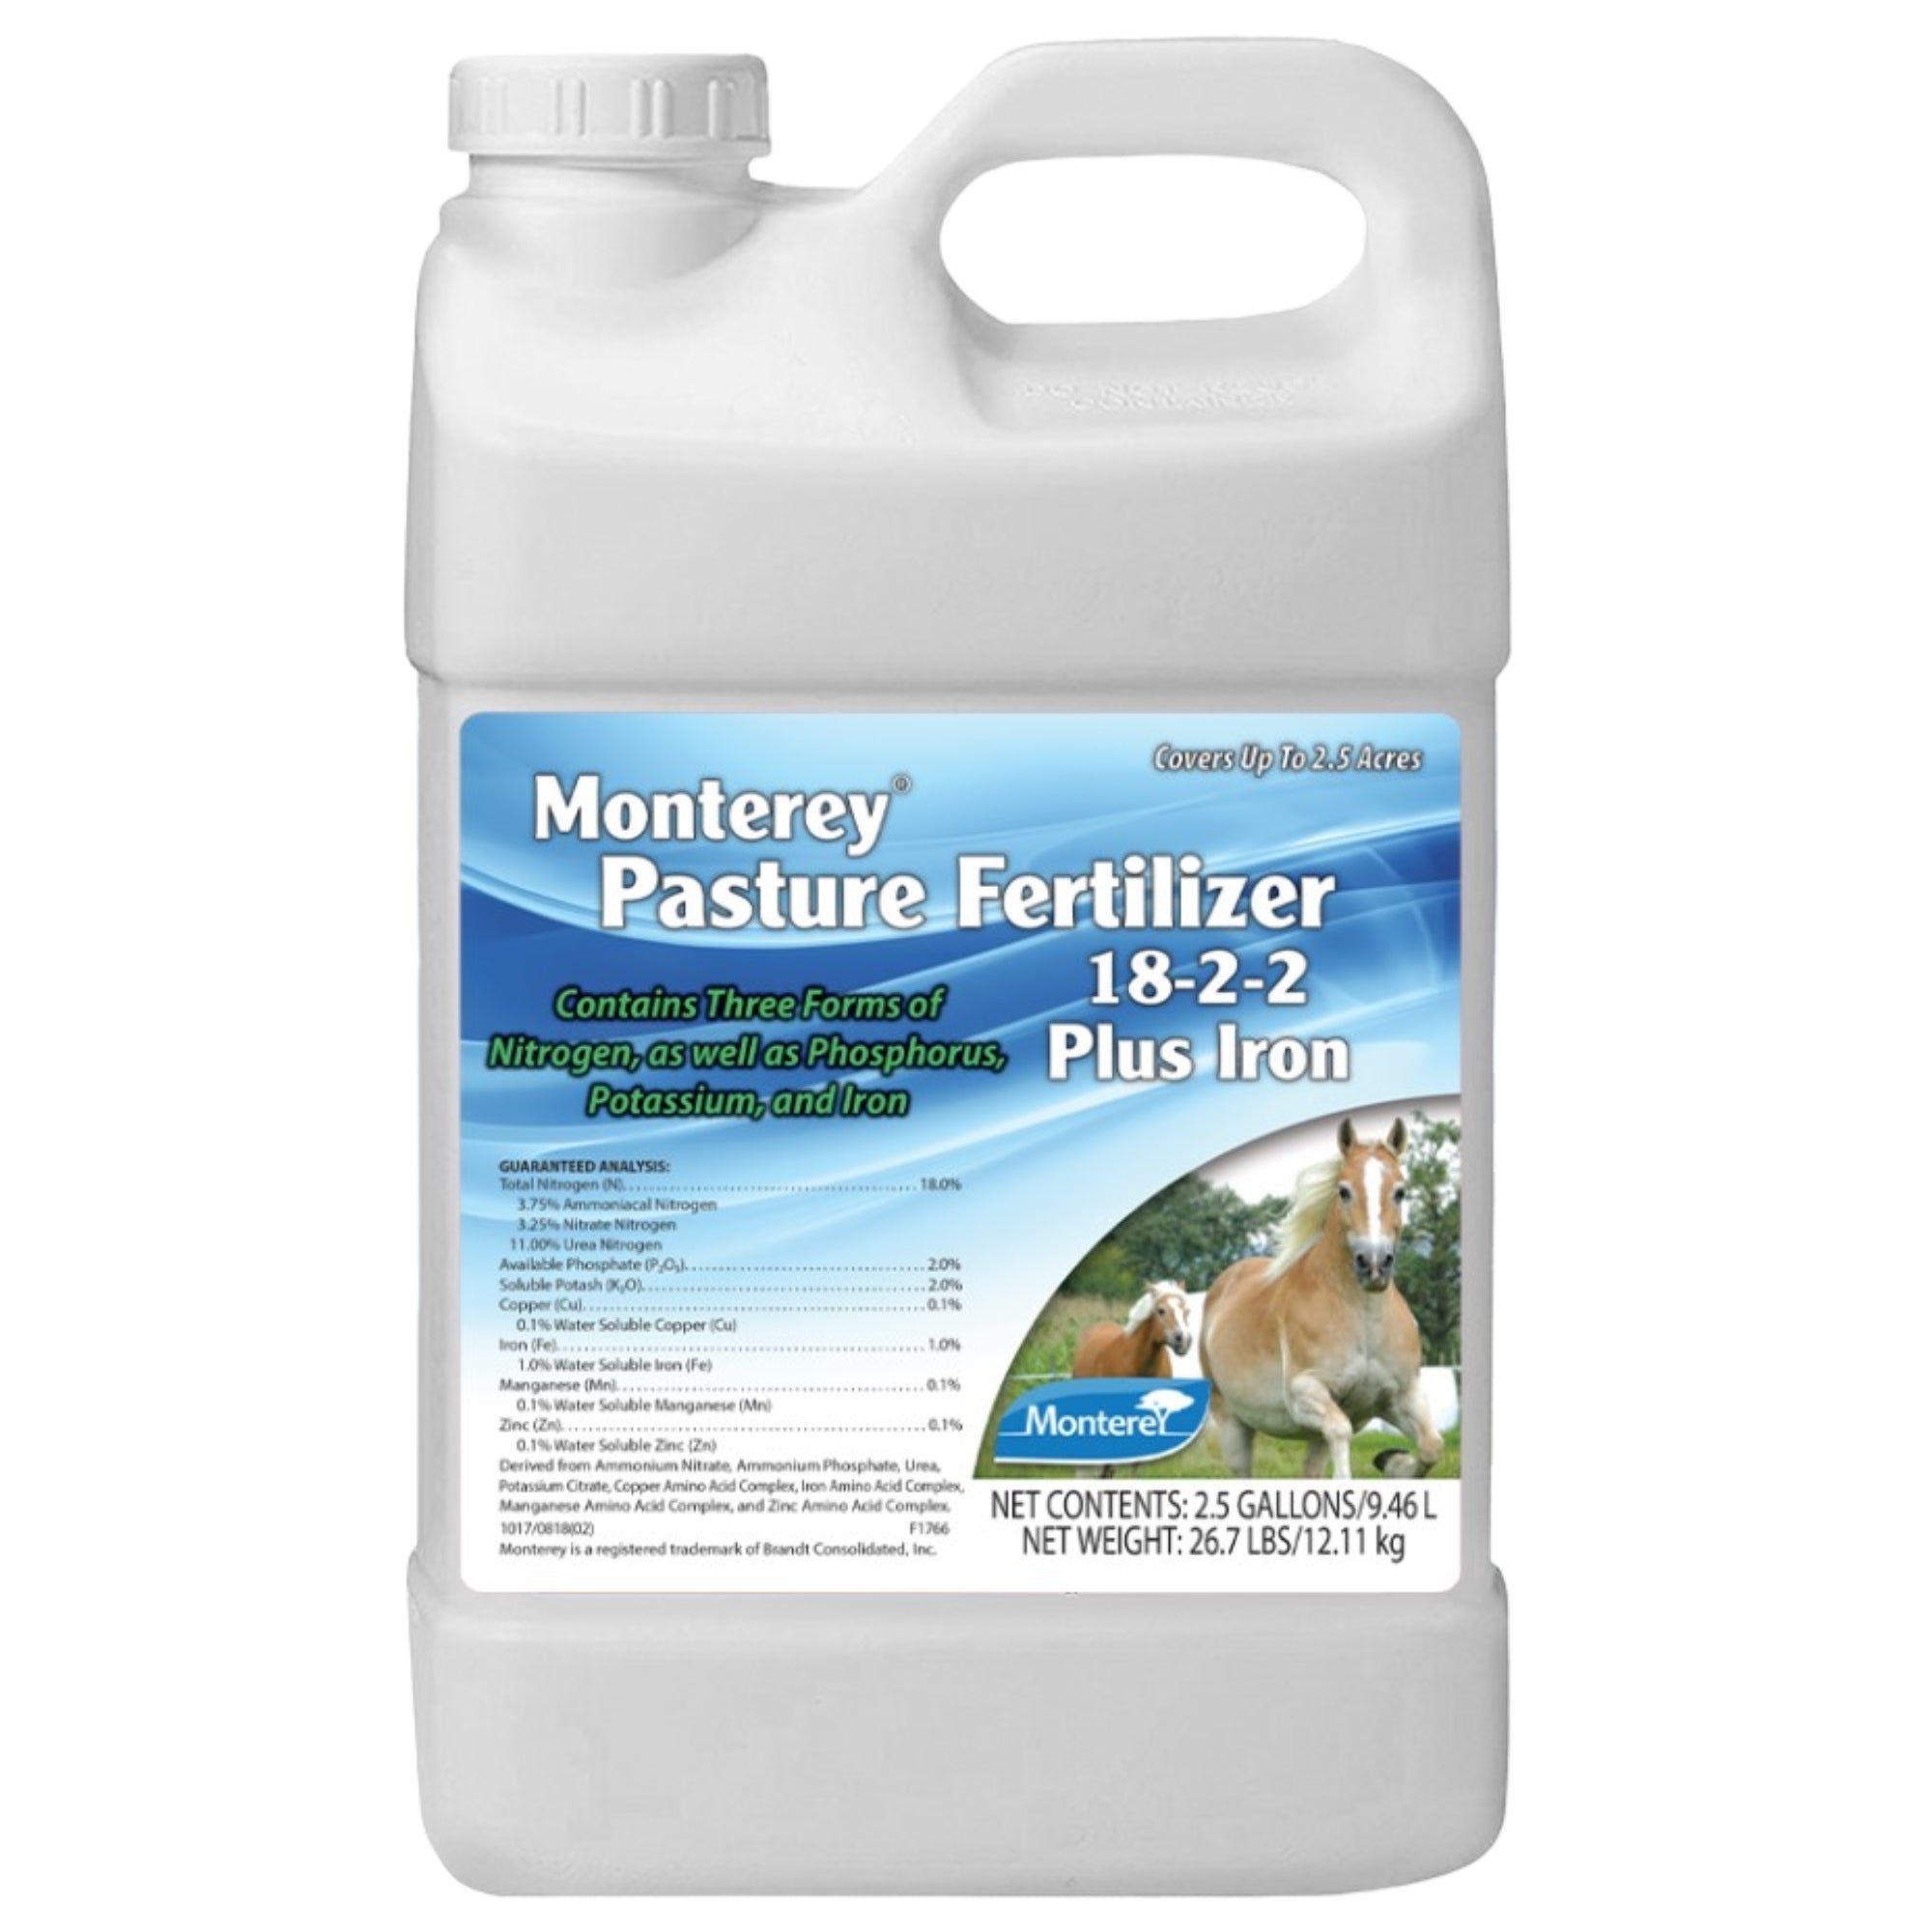 Monterey 18-2-2 Pasture Fertilizer Plus Iron, 2.5 Gallon (Covers up to 2.5 Acres)